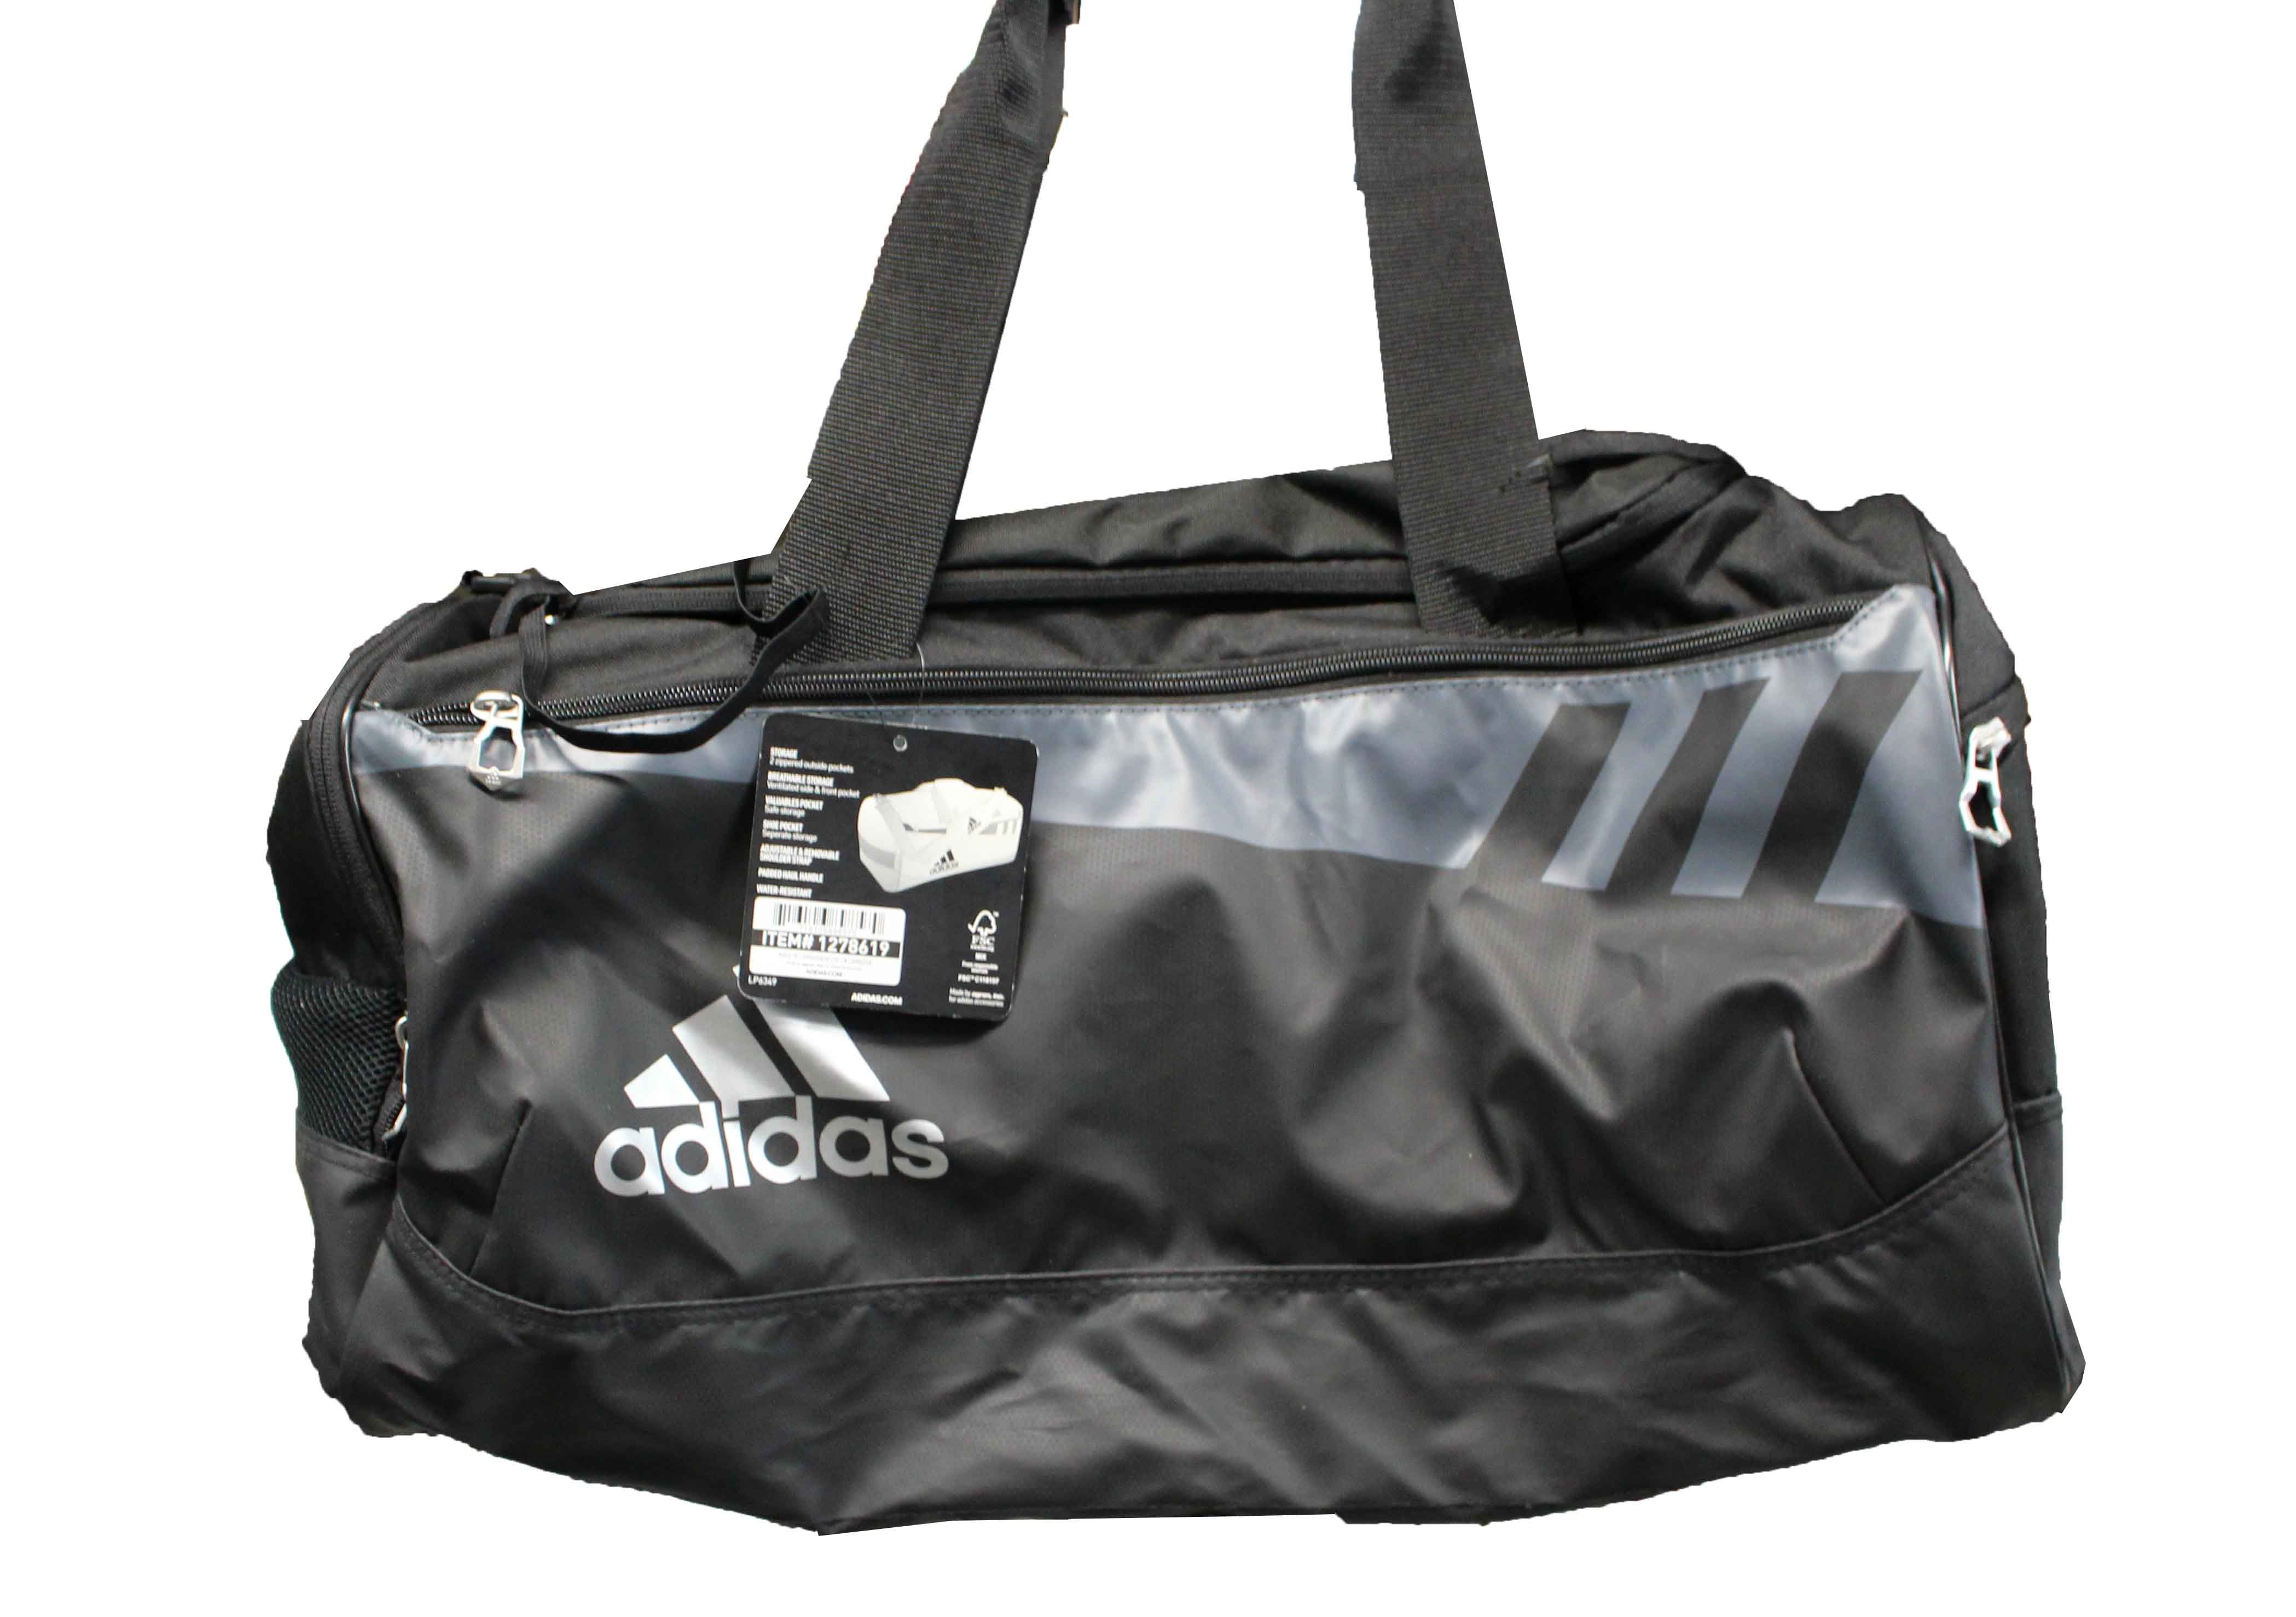 Adidas Team Issue Medium Bag Black/Gray - Walmart.com